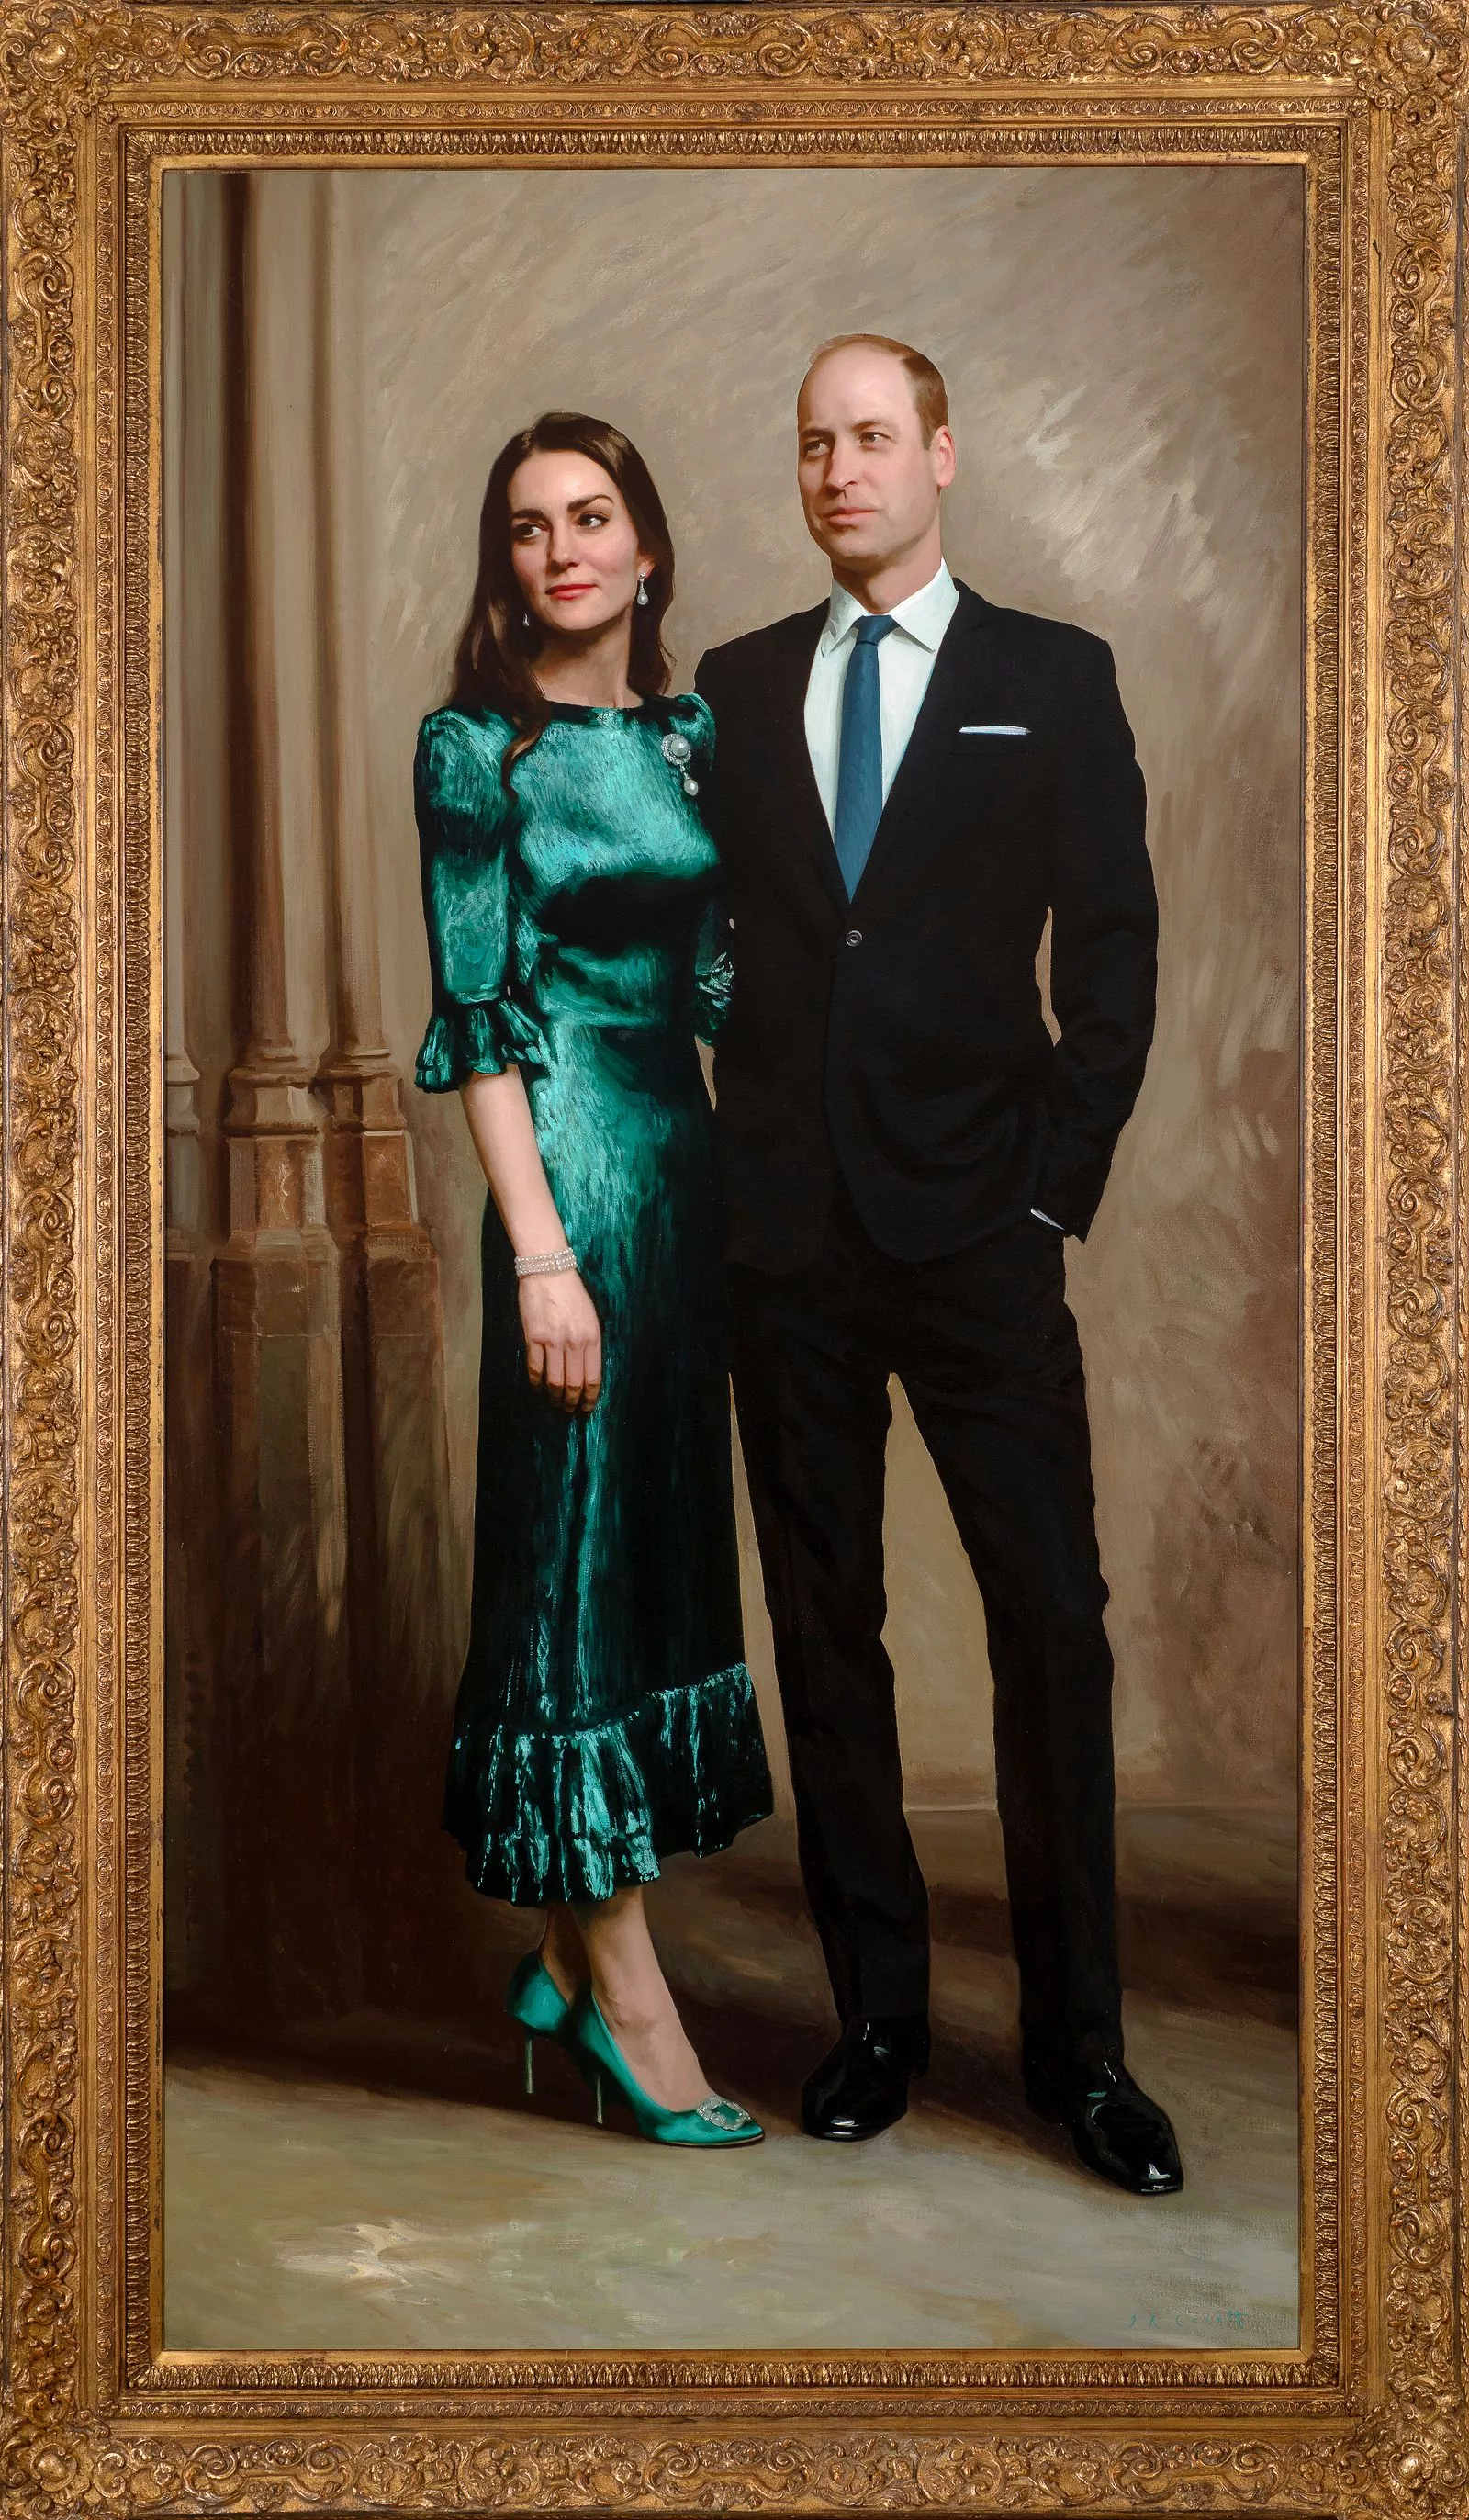 Портрет Кейт Миддлтон и принца Уильяма кисти Джейми Корета выставлен в музее Фицуильяма